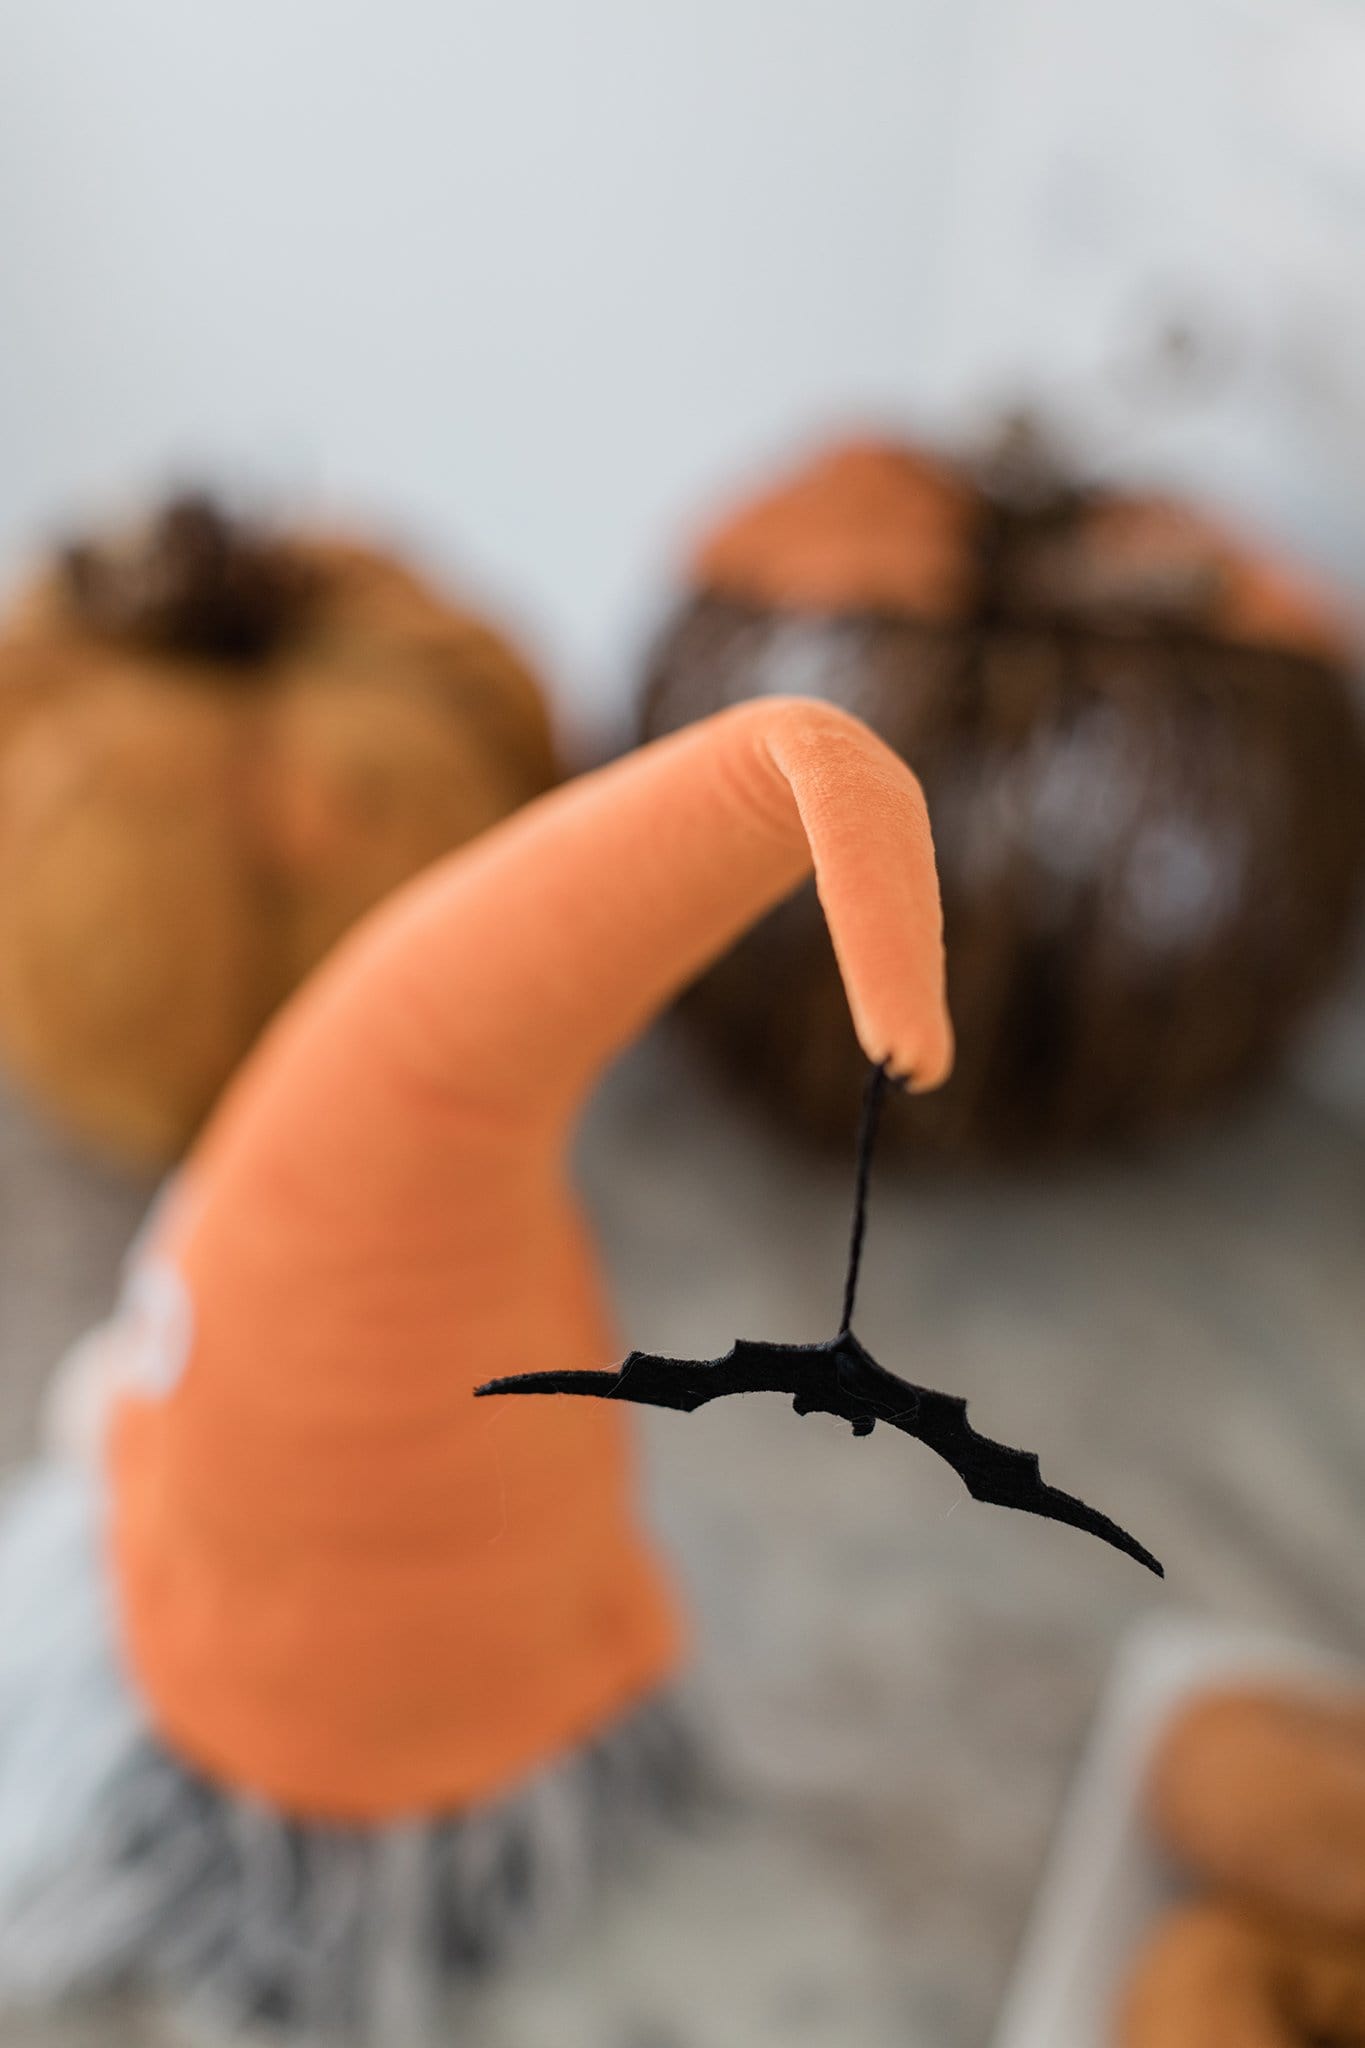 Fall & Halloween Gnomes - Figurines